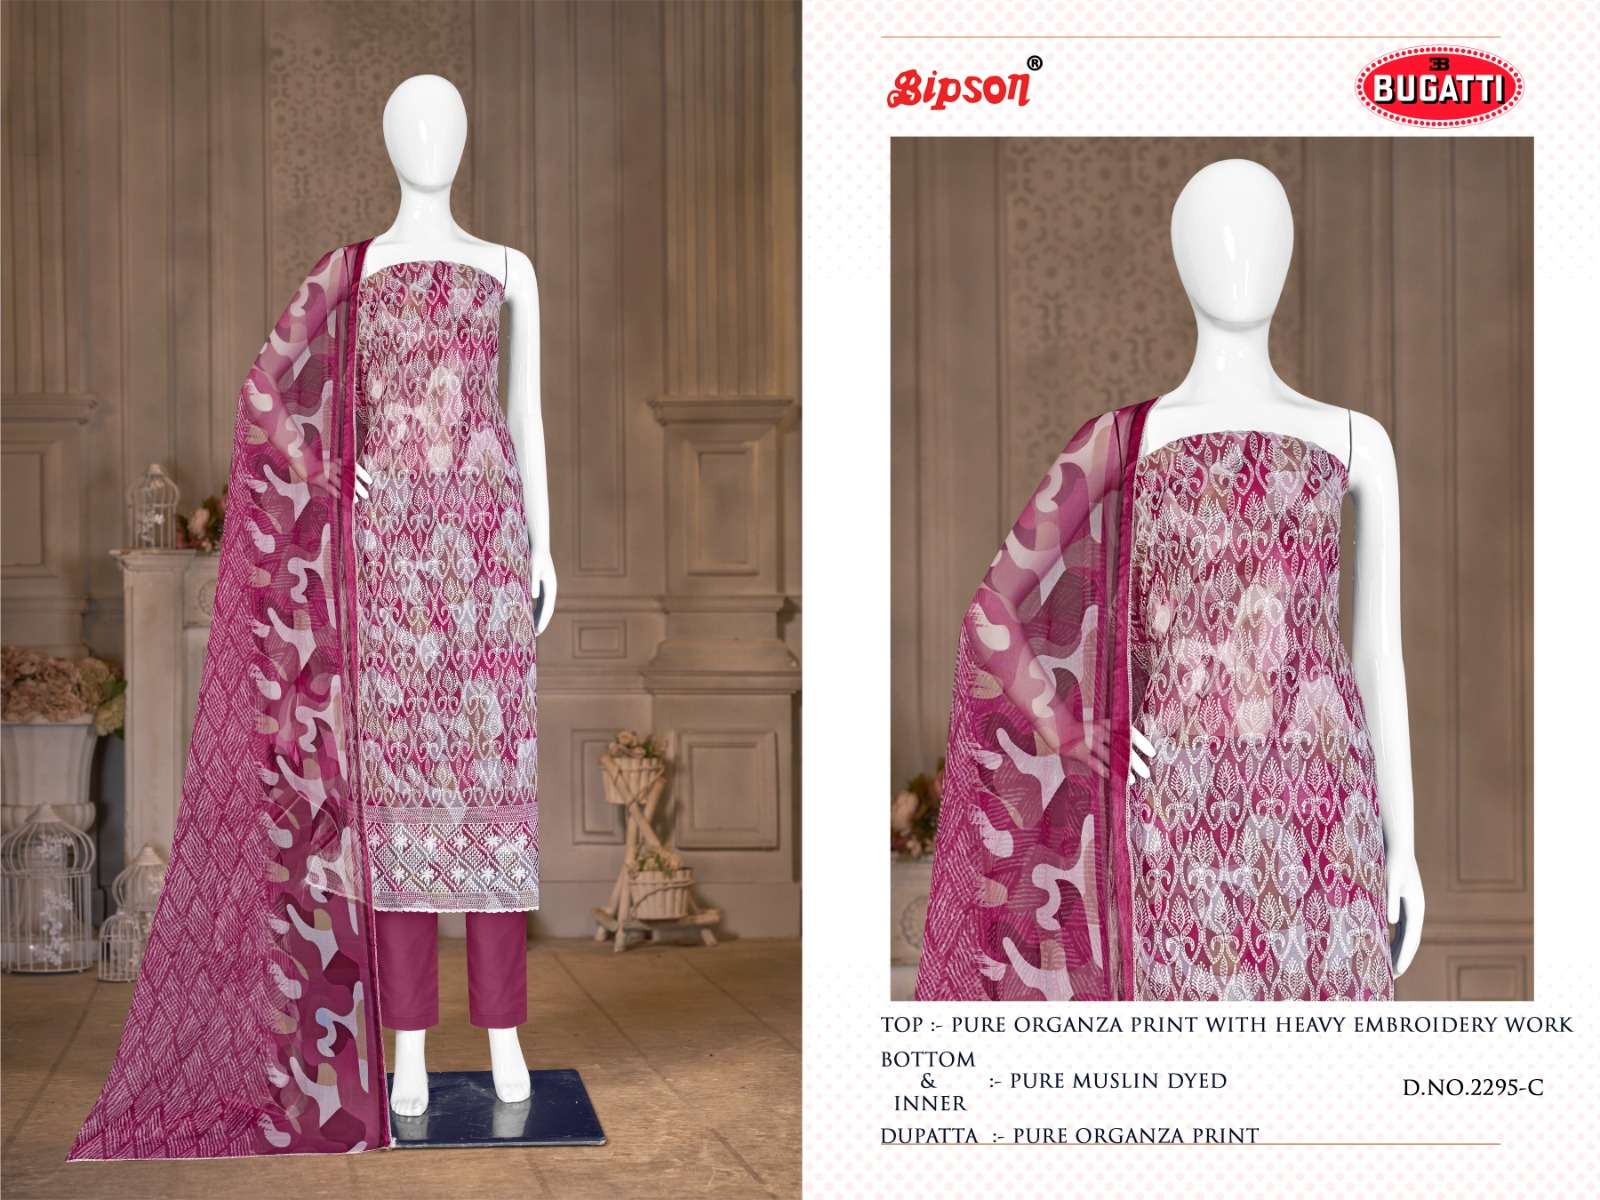 bipson prints bugatti 2295 colour series designer fancy salwar kameez wholesaler surat gujarat